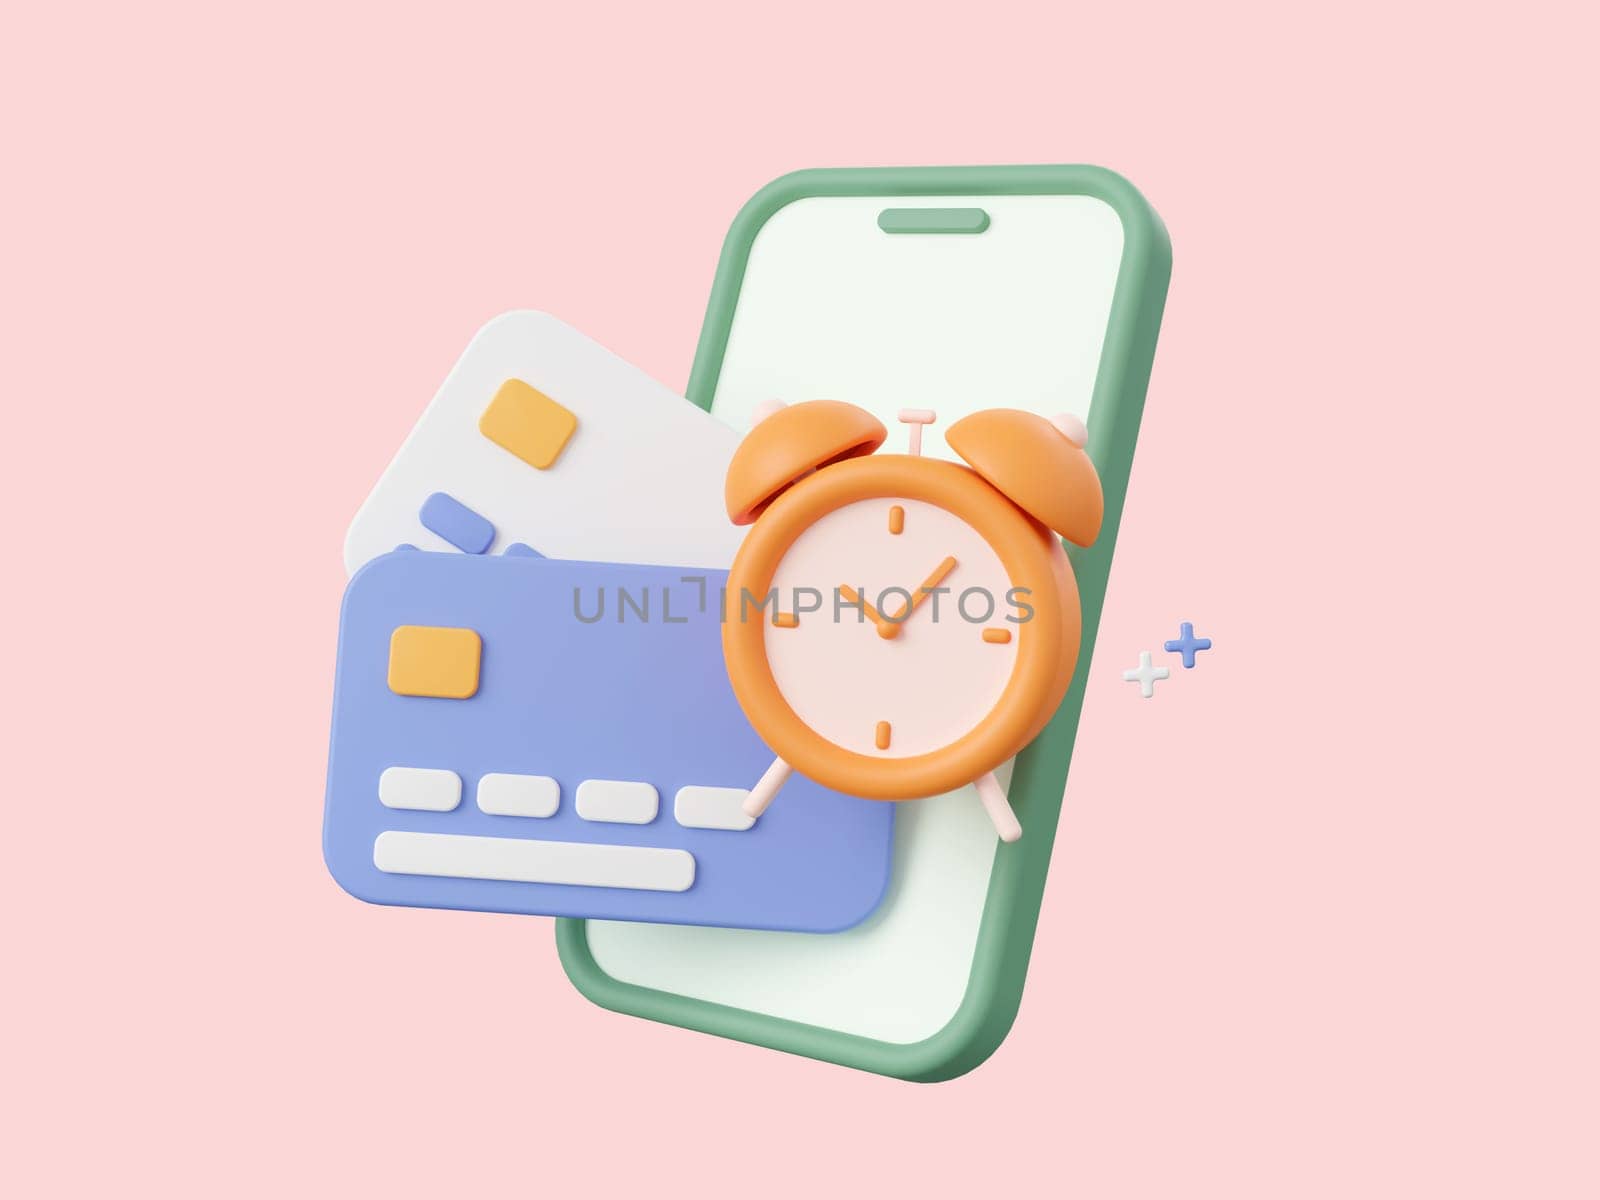 3d cartoon design illustration of Smartphone, credit card with alarm clock notification icon, payment notification, payment due date, reminder notification concept.